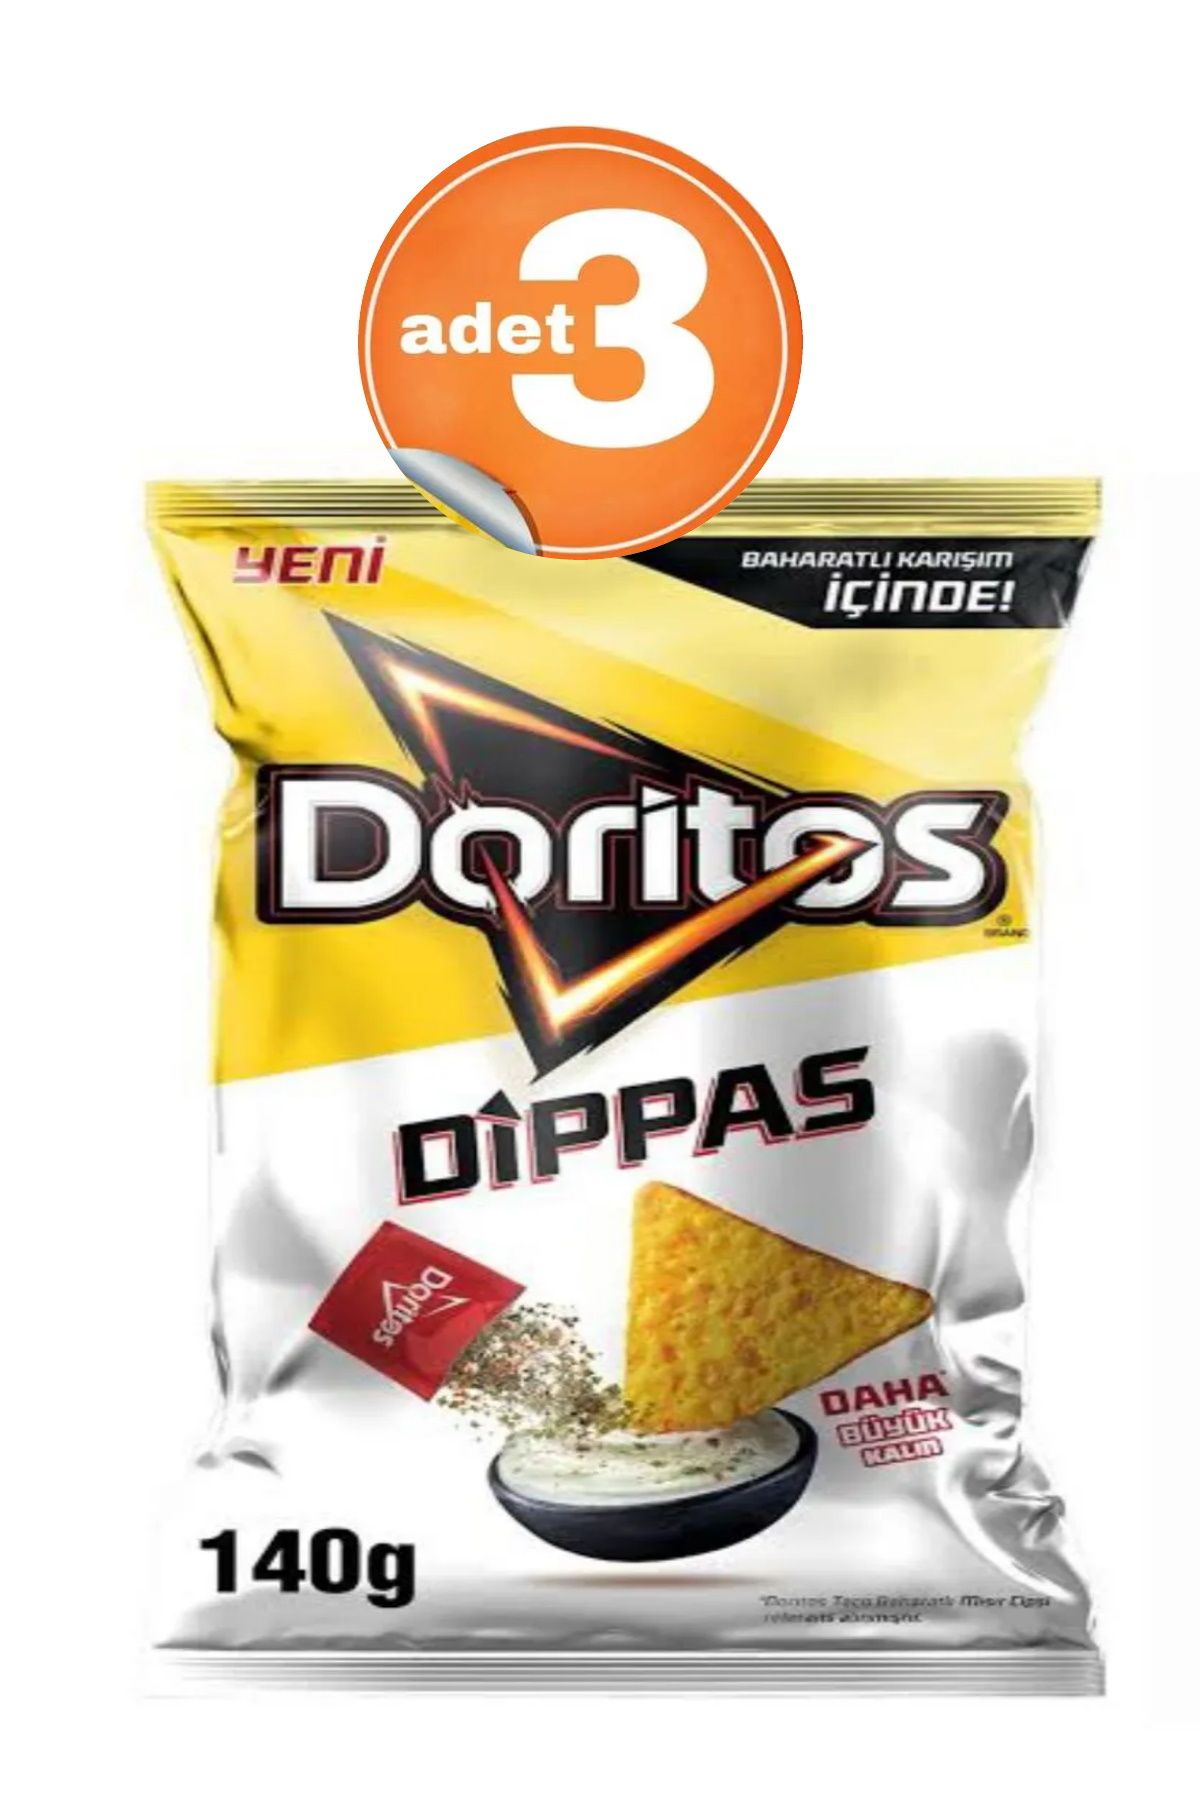 Doritos doritos dippas mısır cipsi yeni lezzet 140gr 3 adet